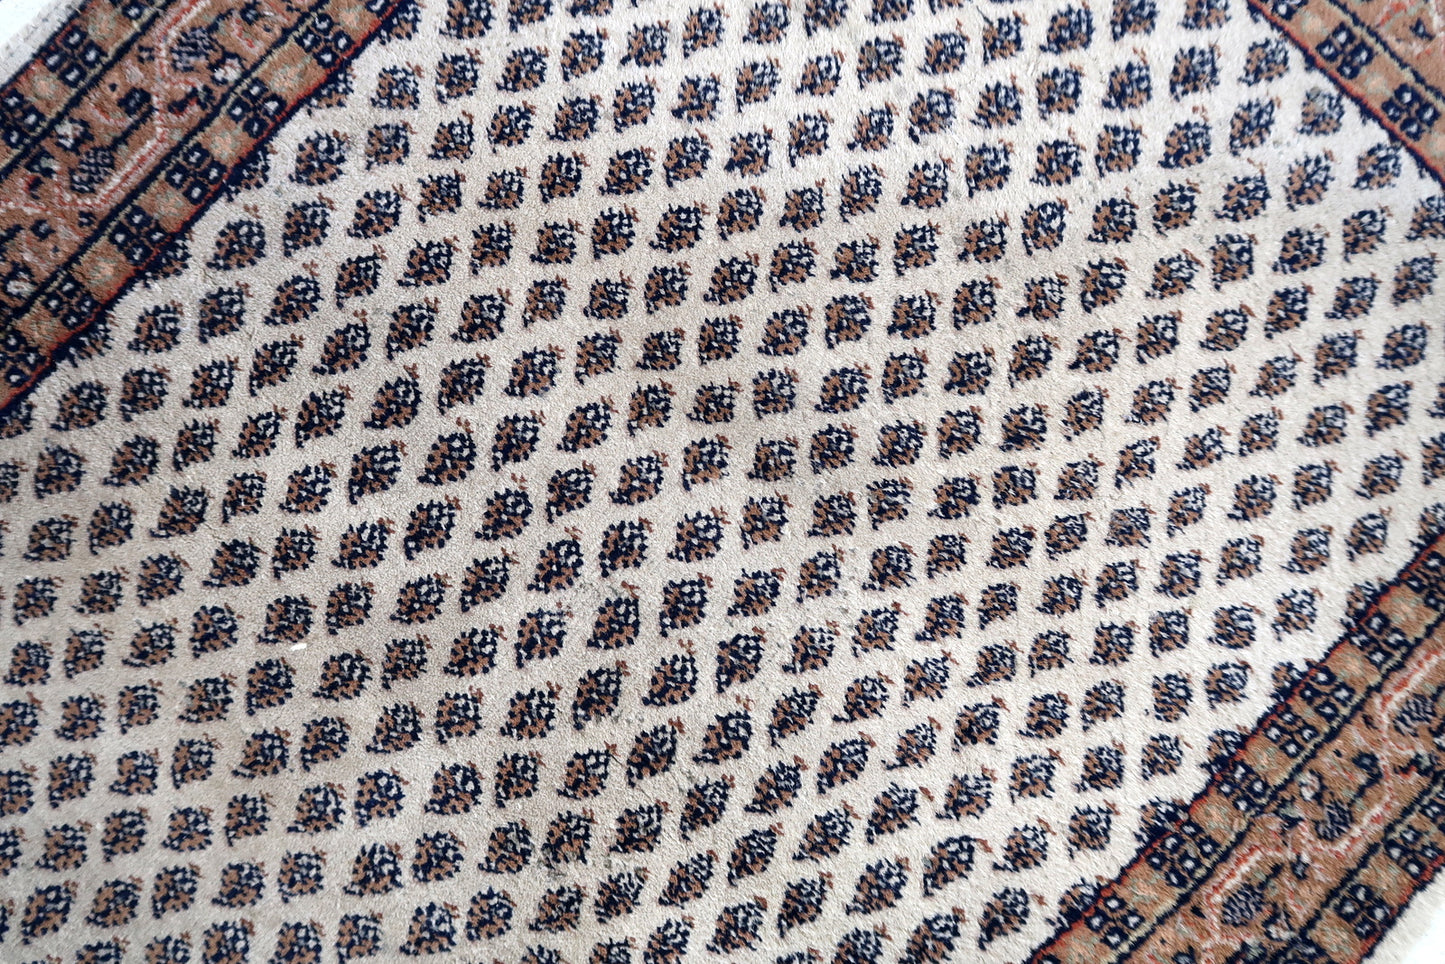 Handmade vintage Indian Seraband rug 1970s